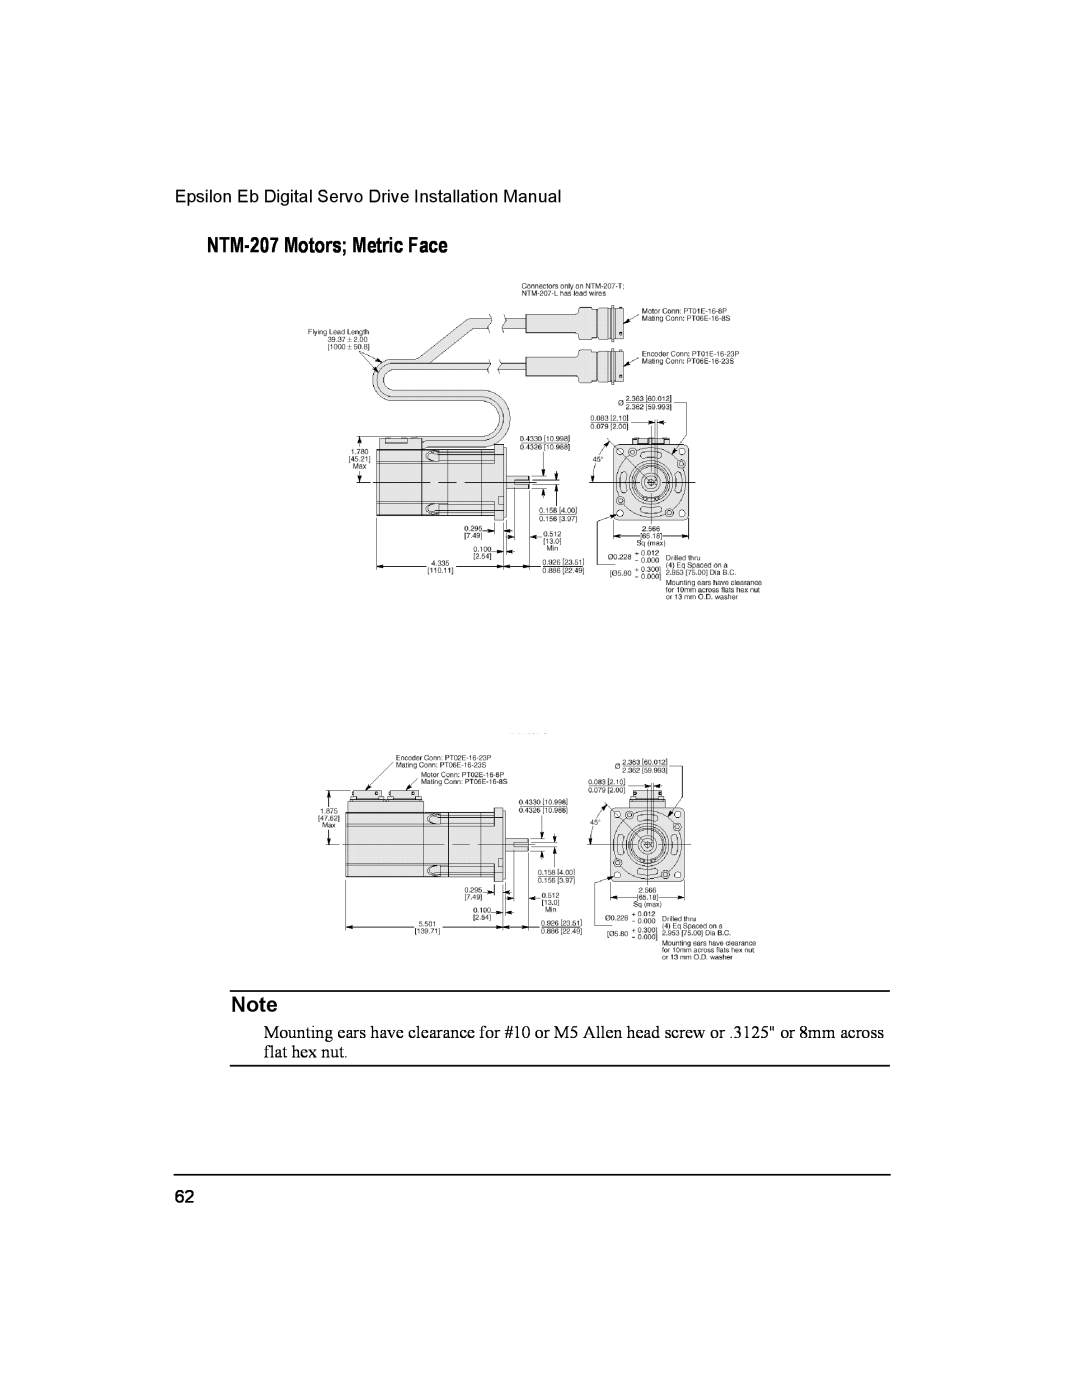 Emerson 400501-05 installation manual NTM-207 Motors Metric Face, Epsilon Eb Digital Servo Drive Installation Manual 